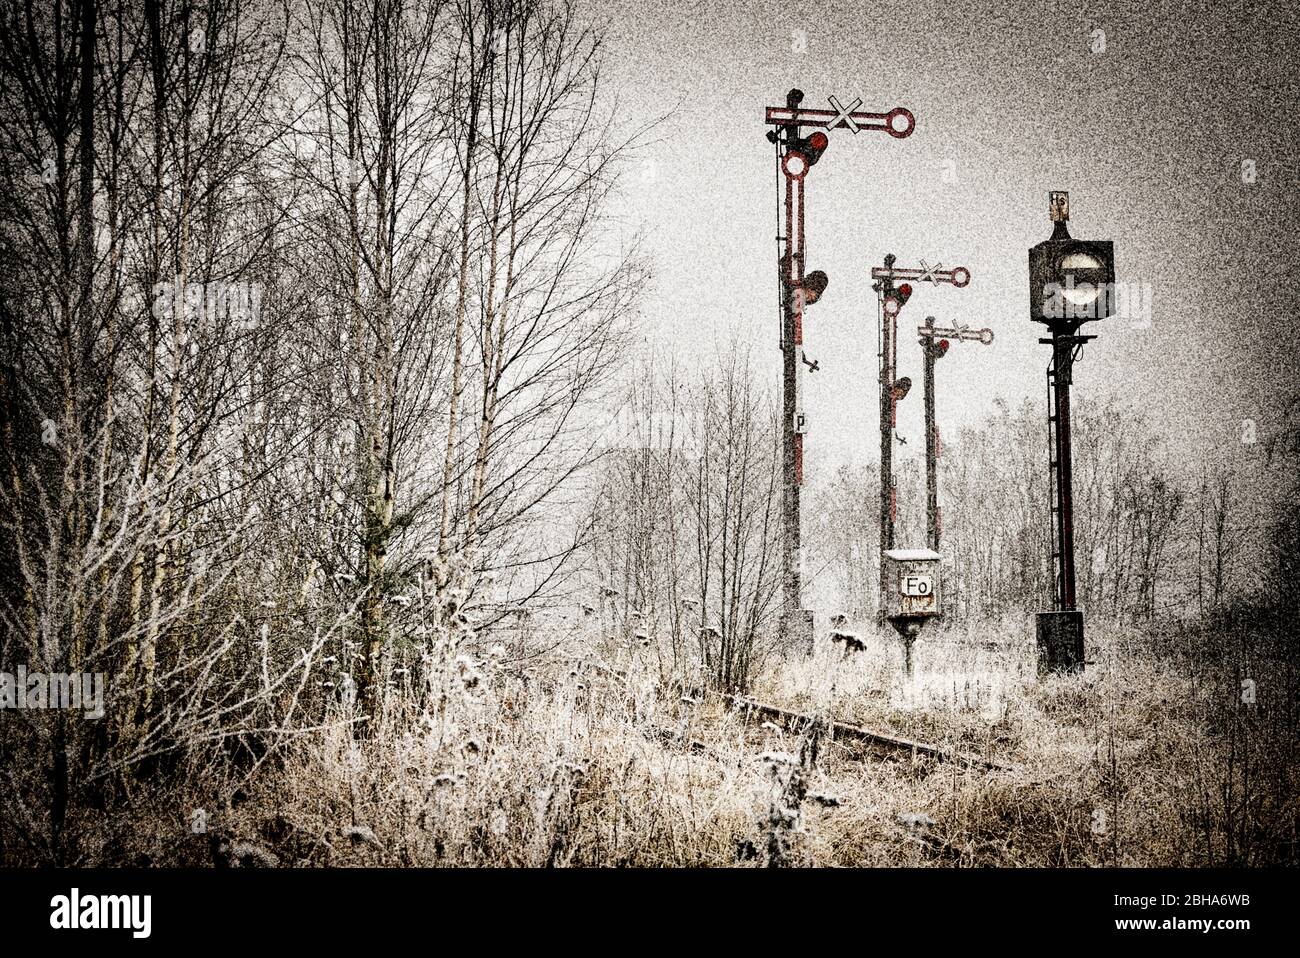 Signals, out of order, tracks, scrub, overgrown, fog, digitally edited, RailArt Stock Photo